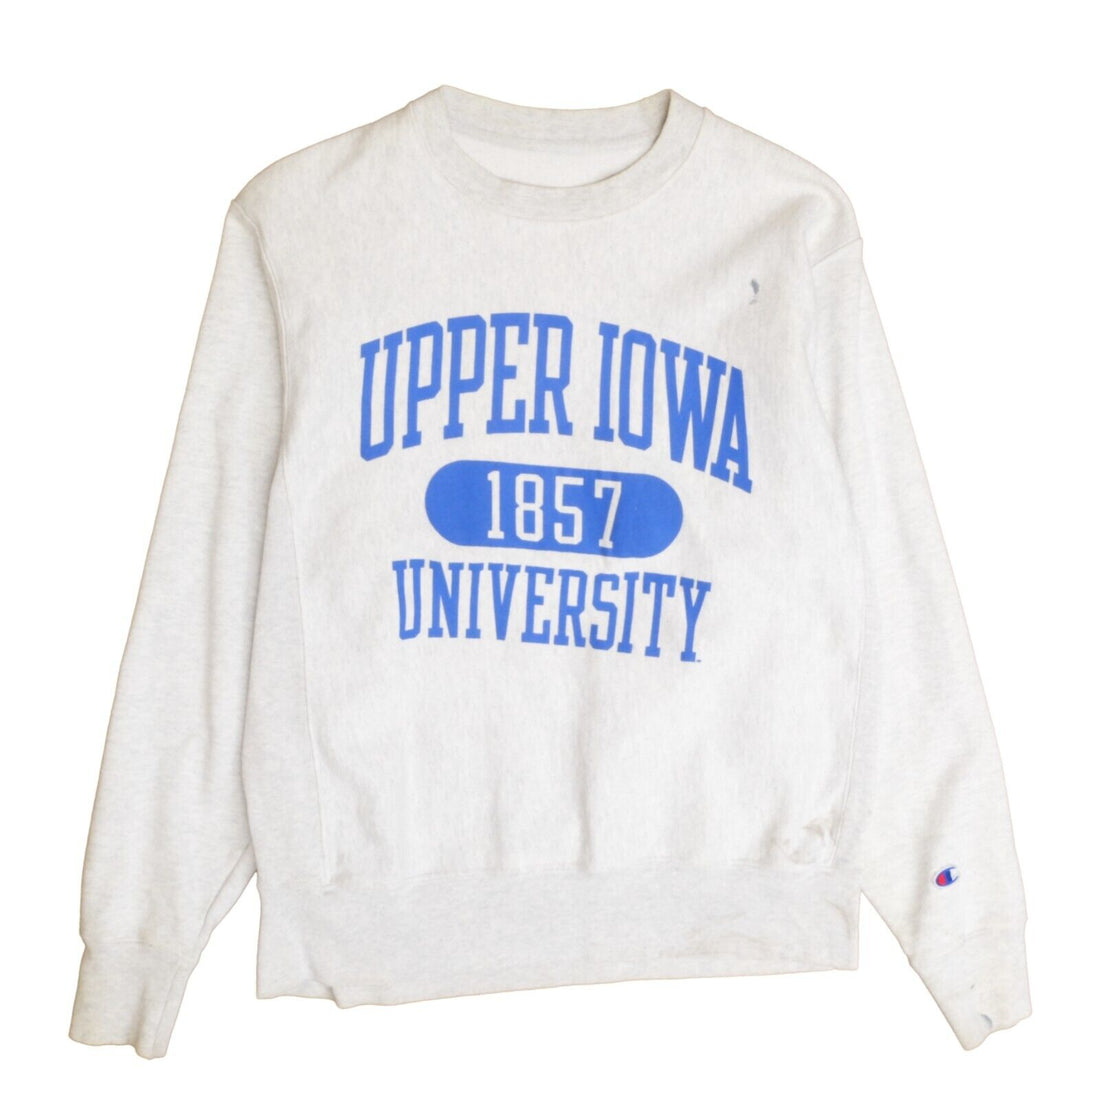 Vintage Upper Iowa University Champion Reverse Weave Sweatshirt Size Large